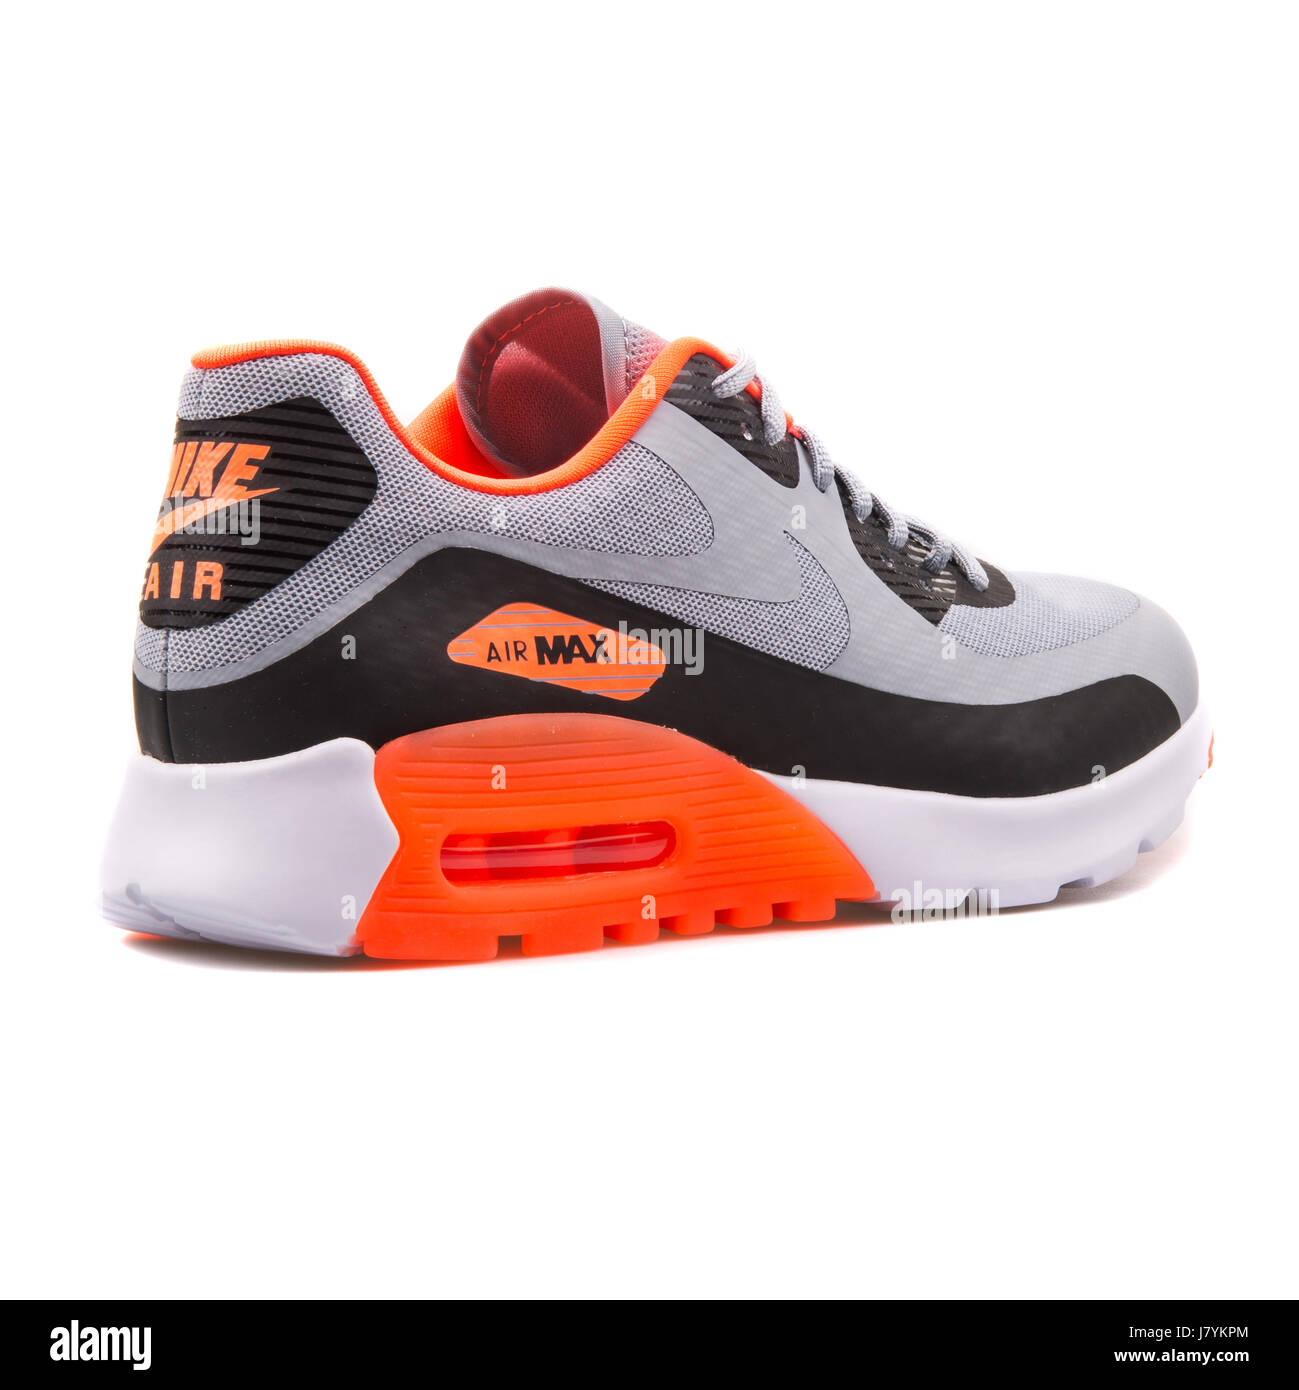 Nike Max 90 W Ultra BR gris y naranja Sneakers - Fotografía de stock - Alamy